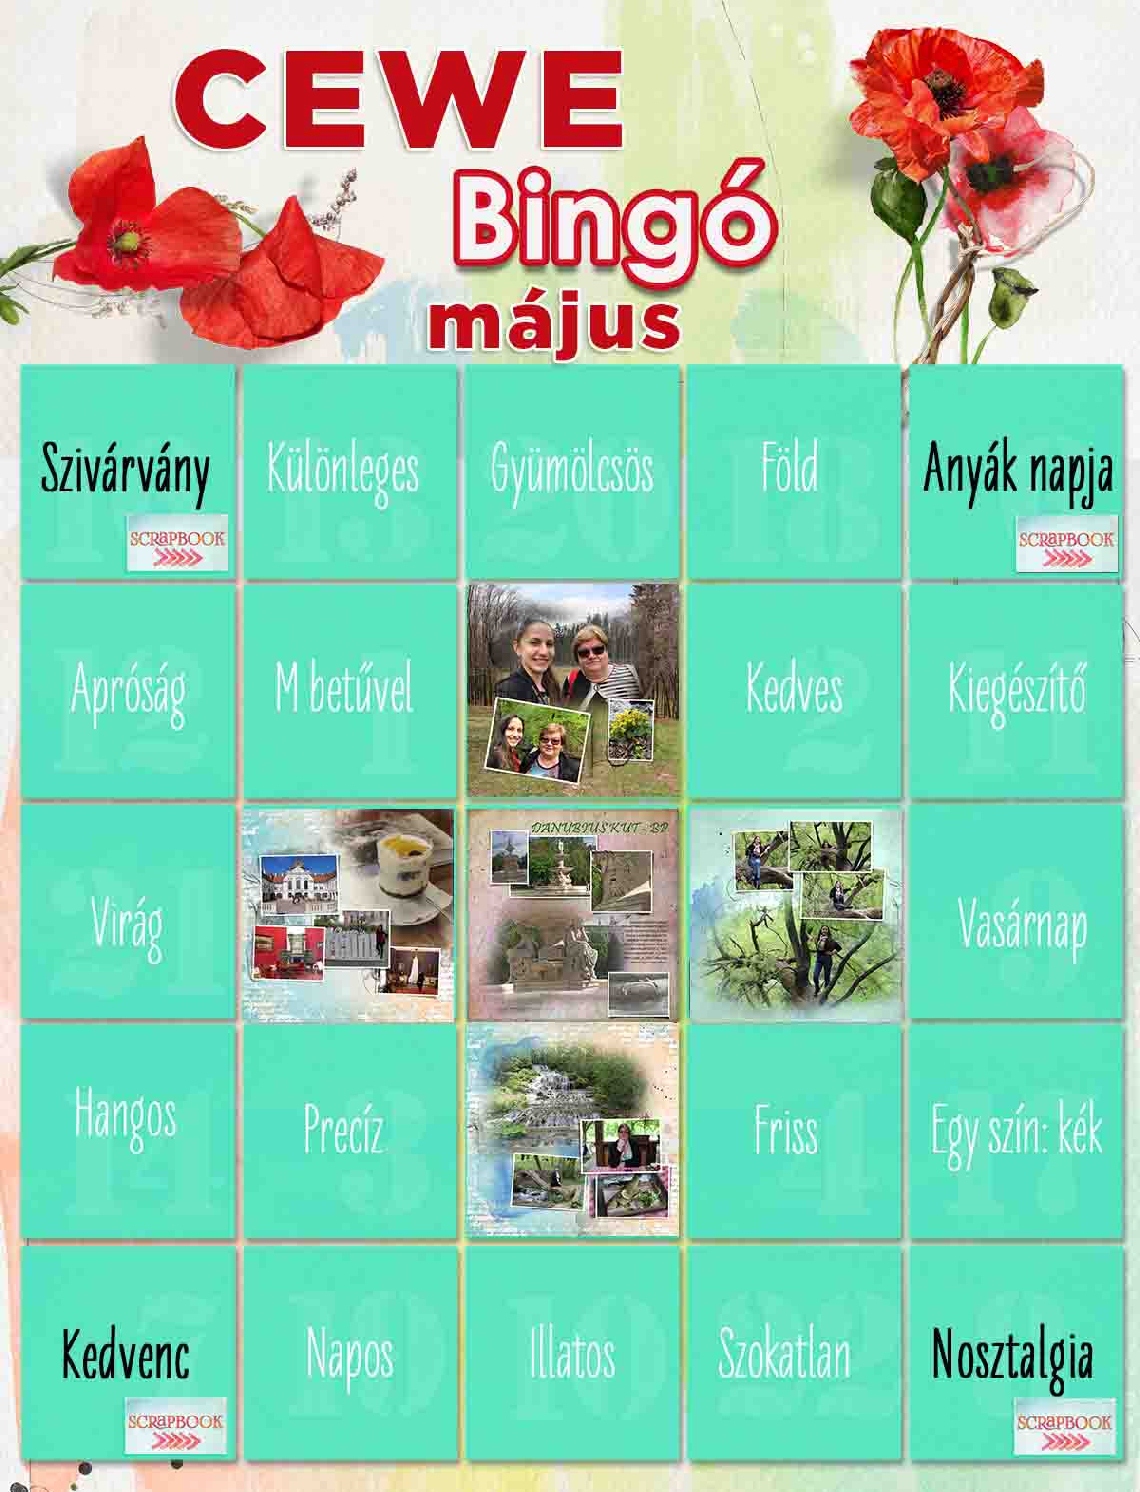 bingo 5ös_2021_maj Tundochka.jpg